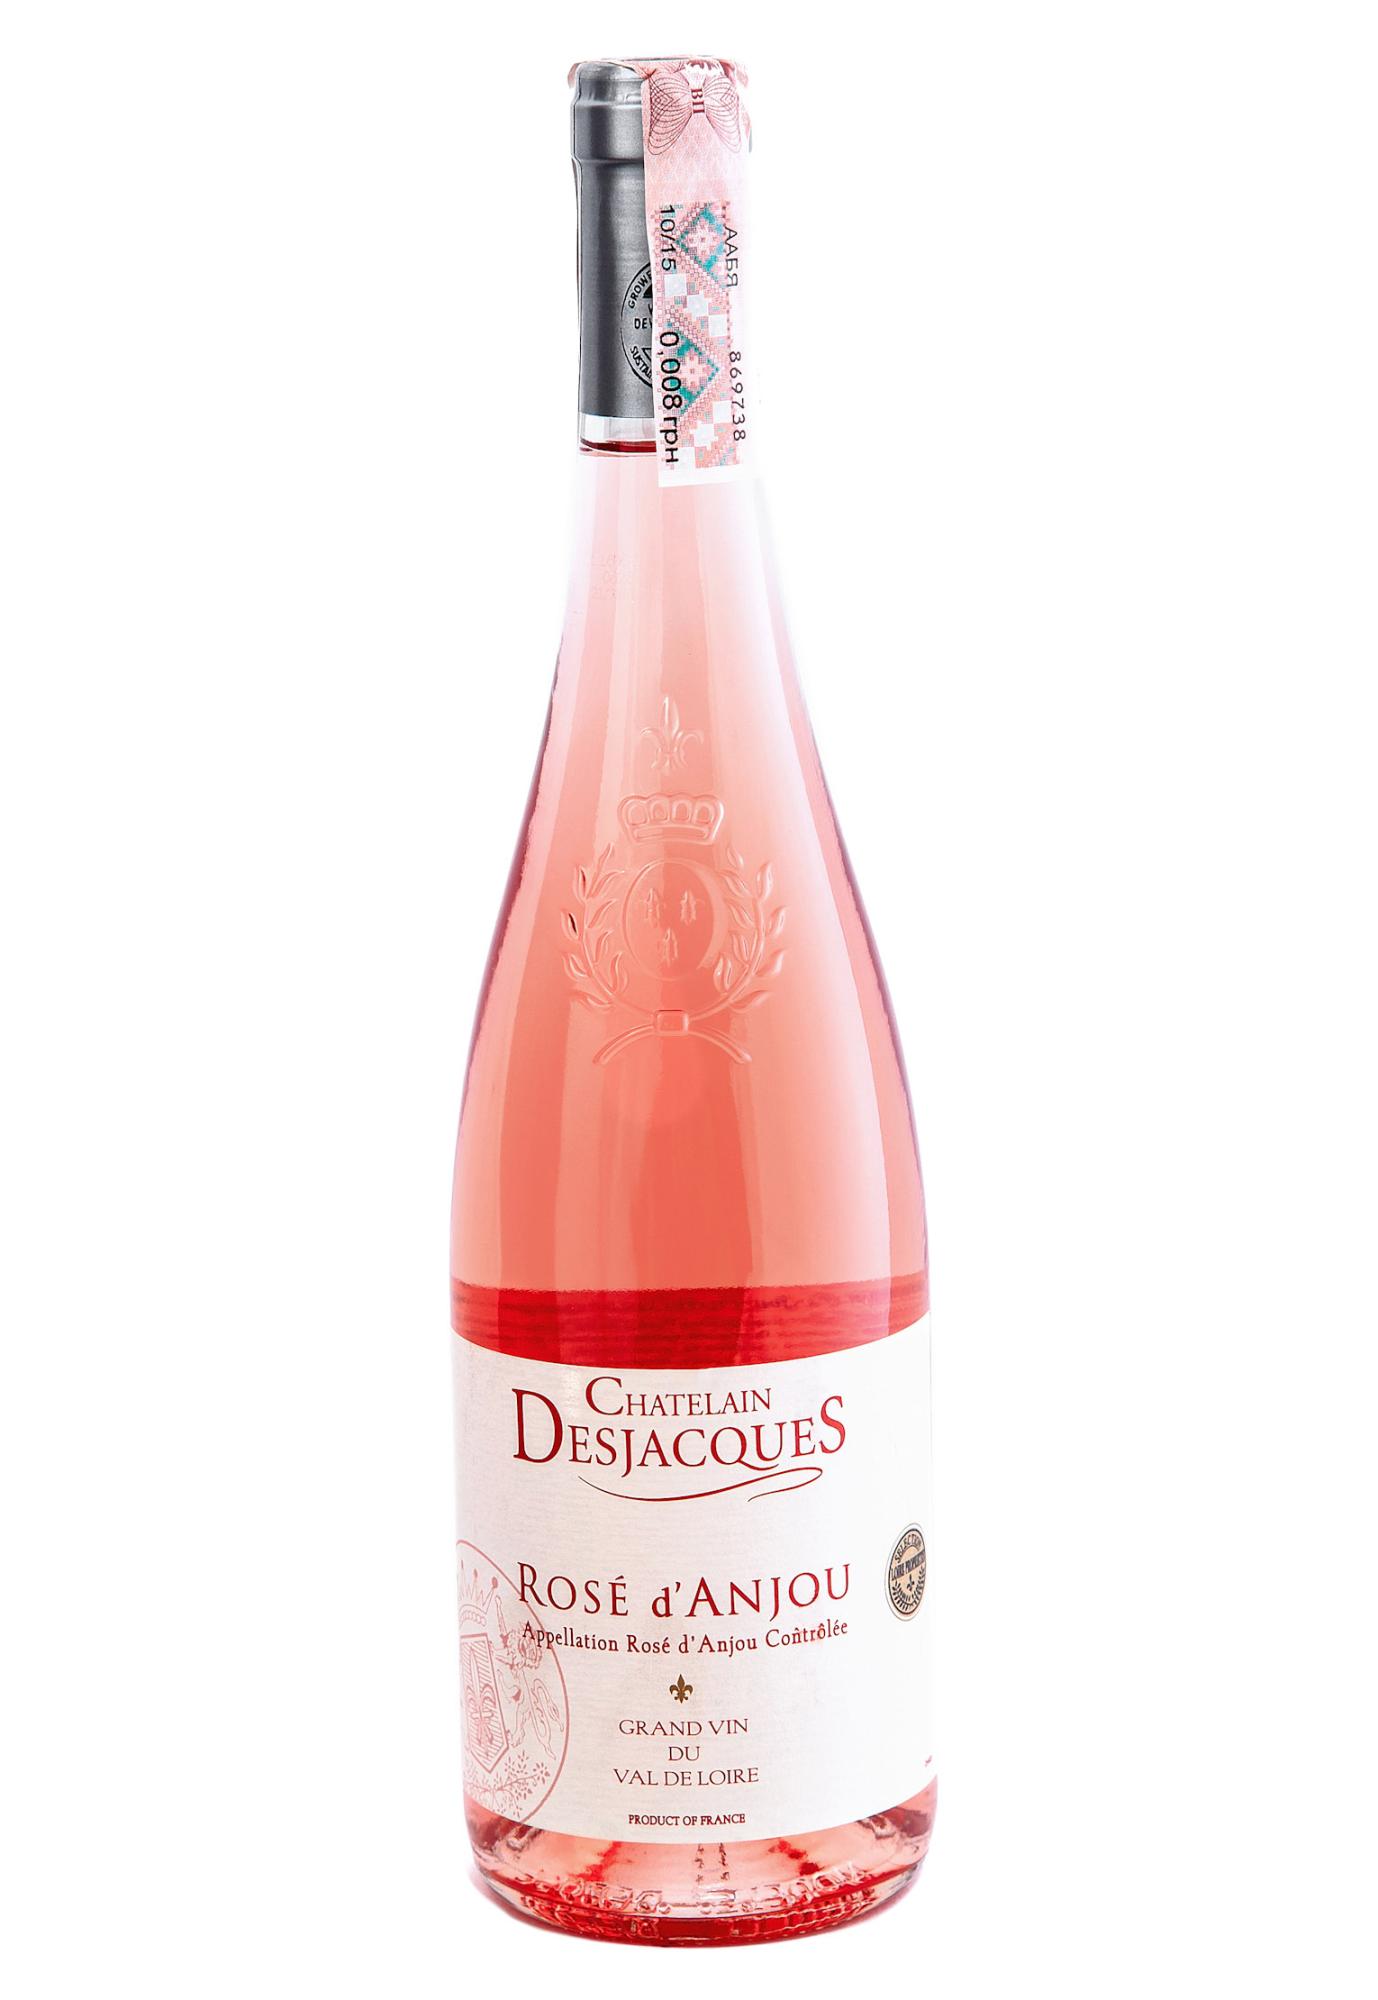 Розовые вина кб. Розе Анжу розовое вино полусладкое. Вино Chatelain Desjacques. Вино Rose d'Anjou розовое полусладкое. Вино Анжур роз красное.